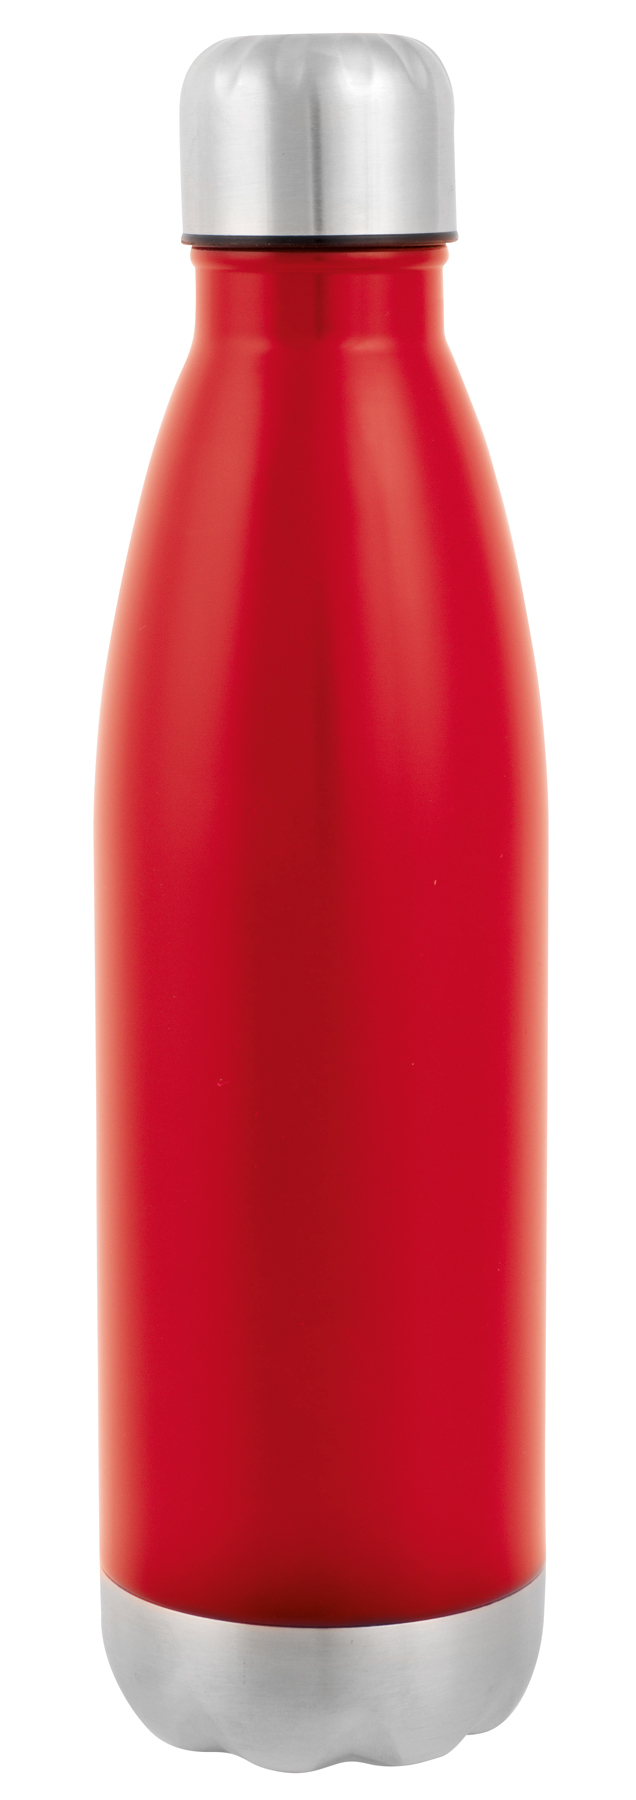 Double-walled vacuum bottle GOLDEN TASTE - red